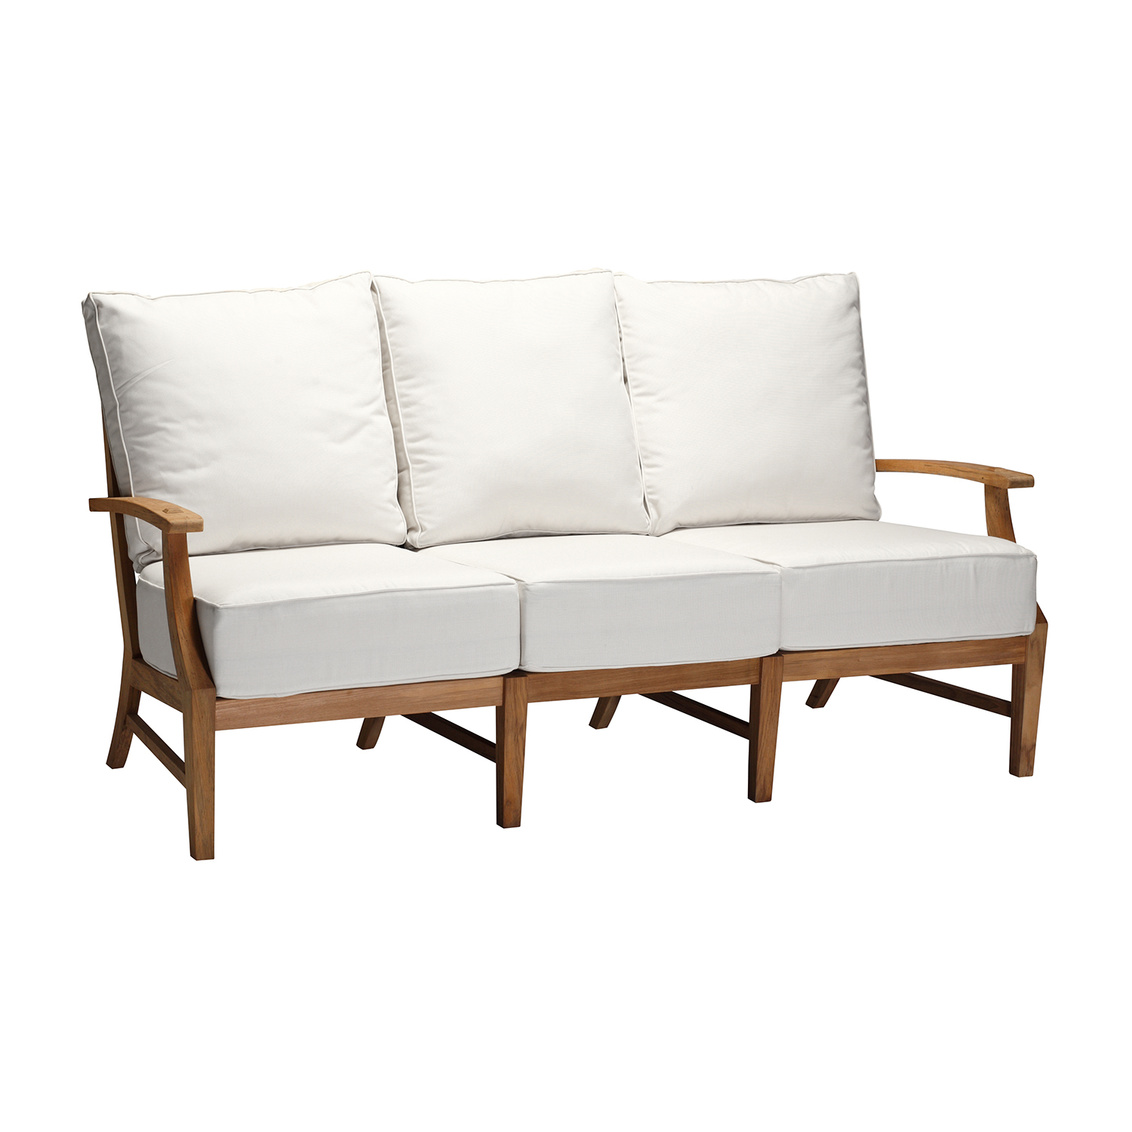 croquet teak sofa in natural teak – frame only product image